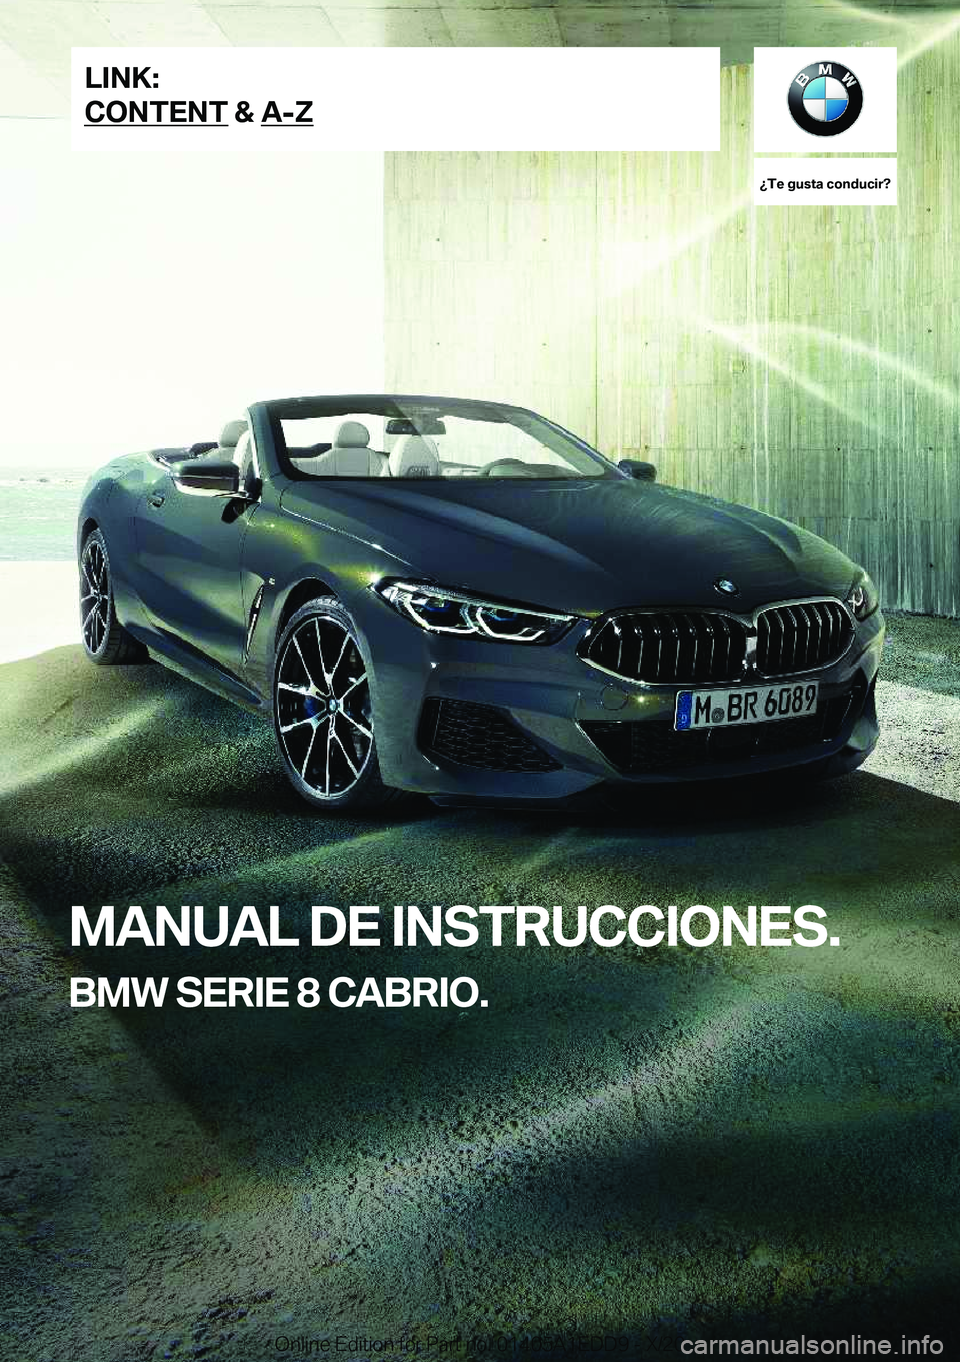 BMW 8 SERIES CONVERTIBLE 2021  Manuales de Empleo (in Spanish) ��T�e��g�u�s�t�a��c�o�n�d�u�c�i�r� 
�M�A�N�U�A�L��D�E��I�N�S�T�R�U�C�C�I�O�N�E�S�.
�B�M�W��S�E�R�I�E��8��C�A�B�R�I�O�.�L�I�N�K�:
�C�O�N�T�E�N�T��&��A�-�Z�O�n�l�i�n�e��E�d�i�t�i�o�n��f�o�r�